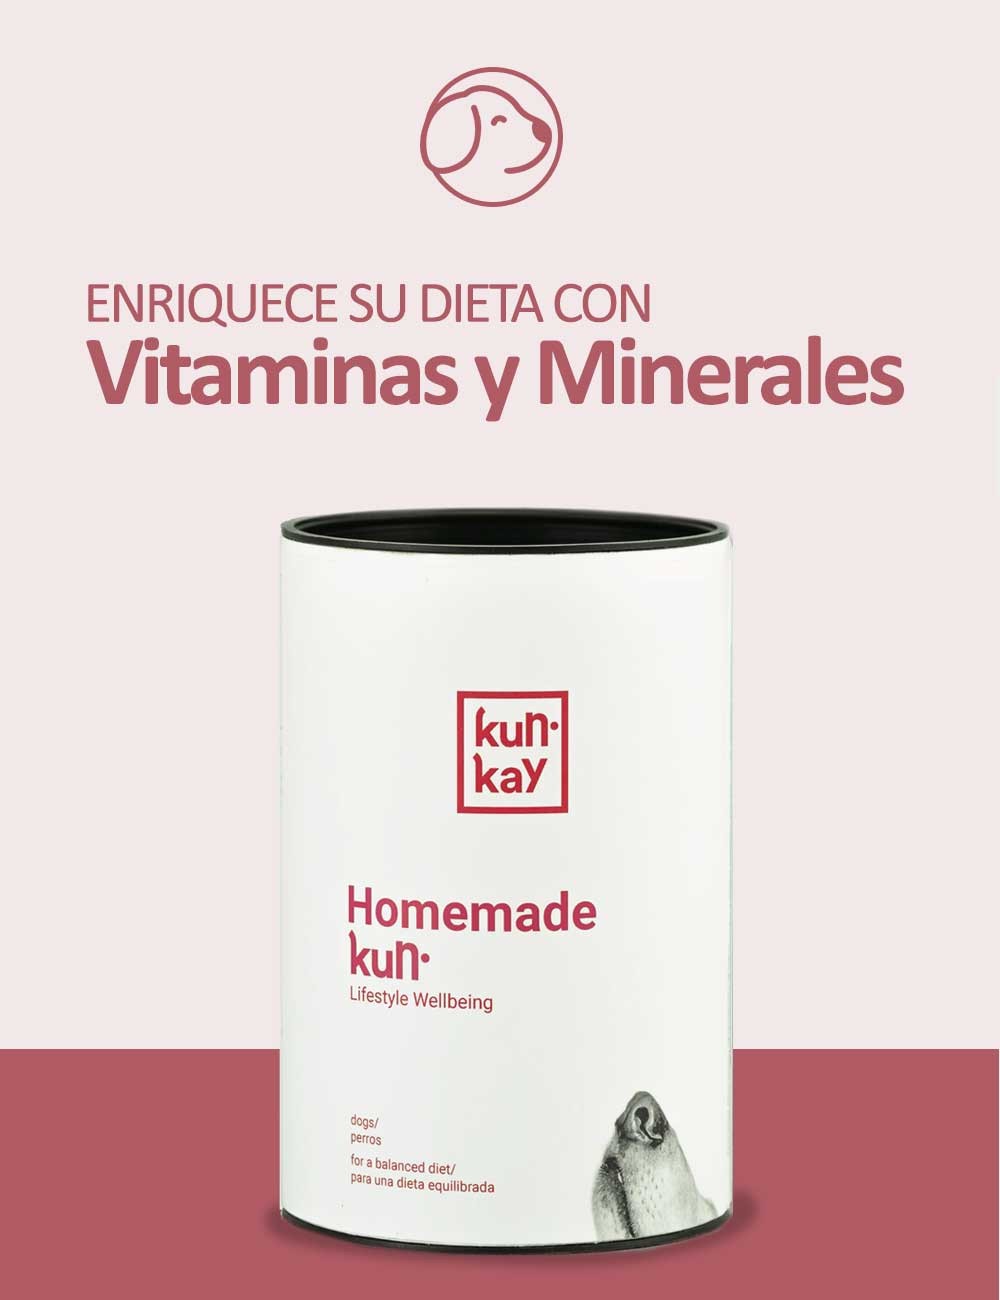 SUPLEMENTO HOMEMADEKUN PERROS- Vitaminas y Minerales GUAU AND CAT - 1